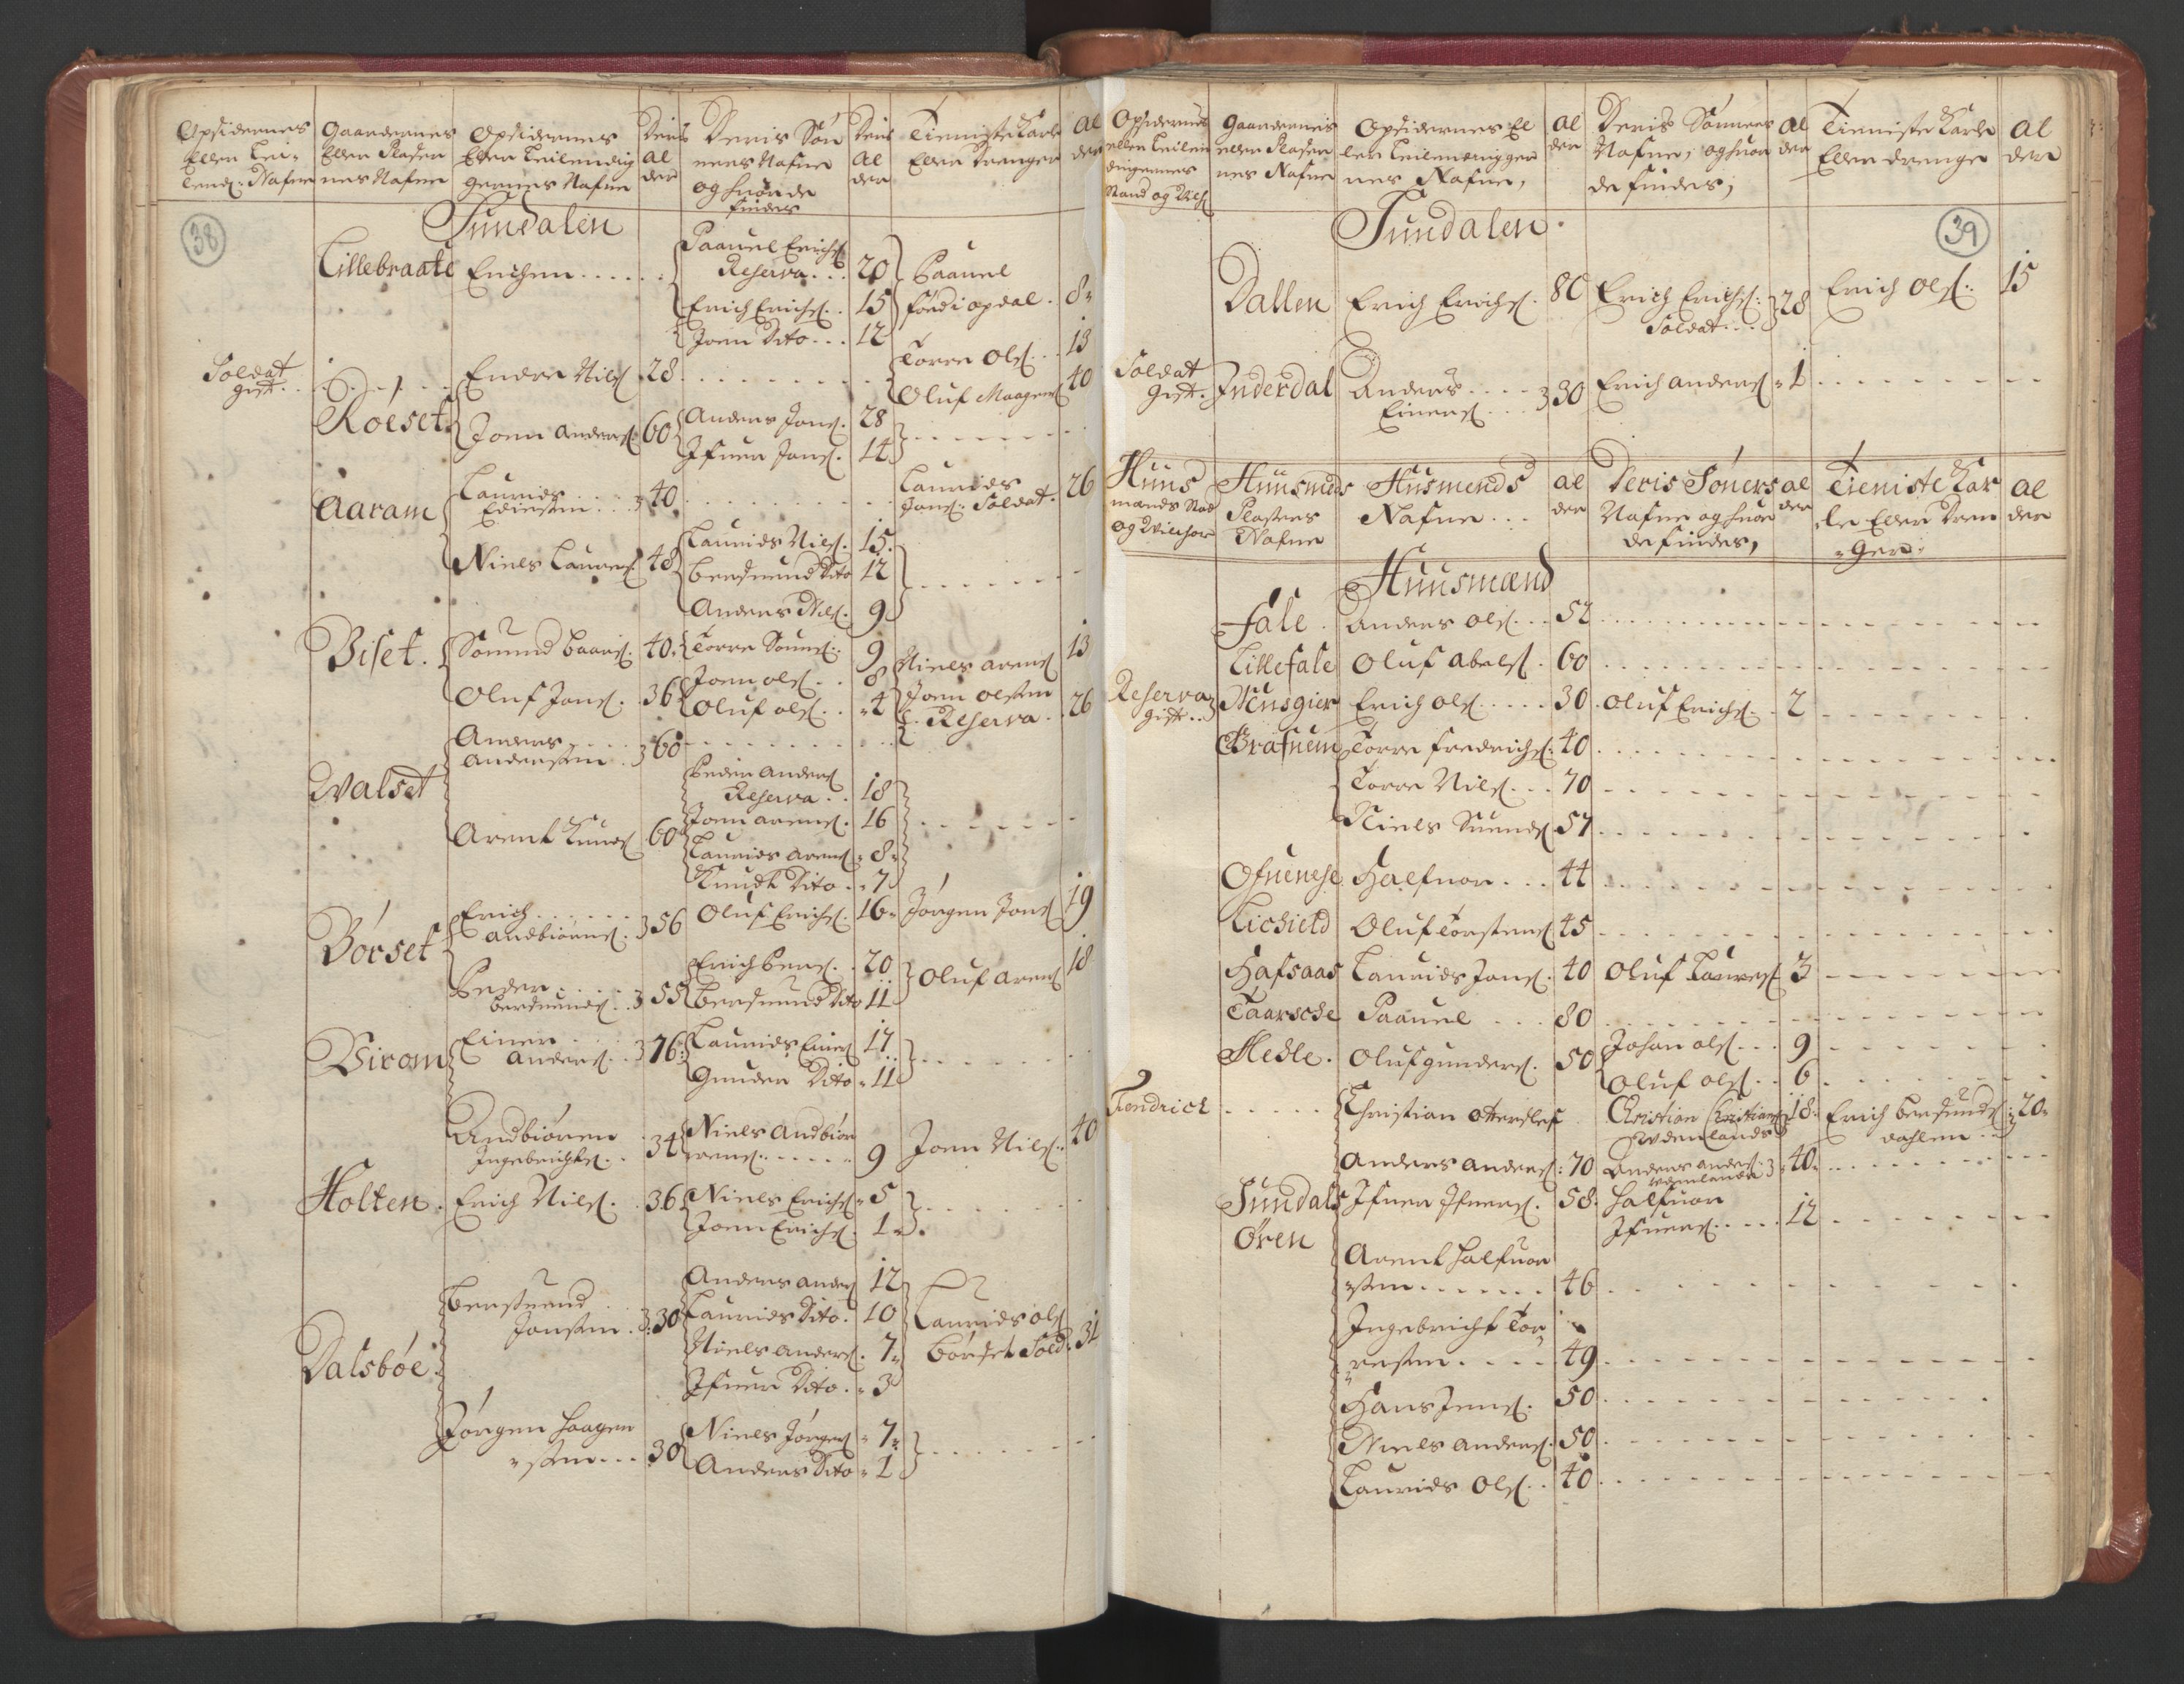 RA, Census (manntall) 1701, no. 11: Nordmøre fogderi and Romsdal fogderi, 1701, p. 38-39